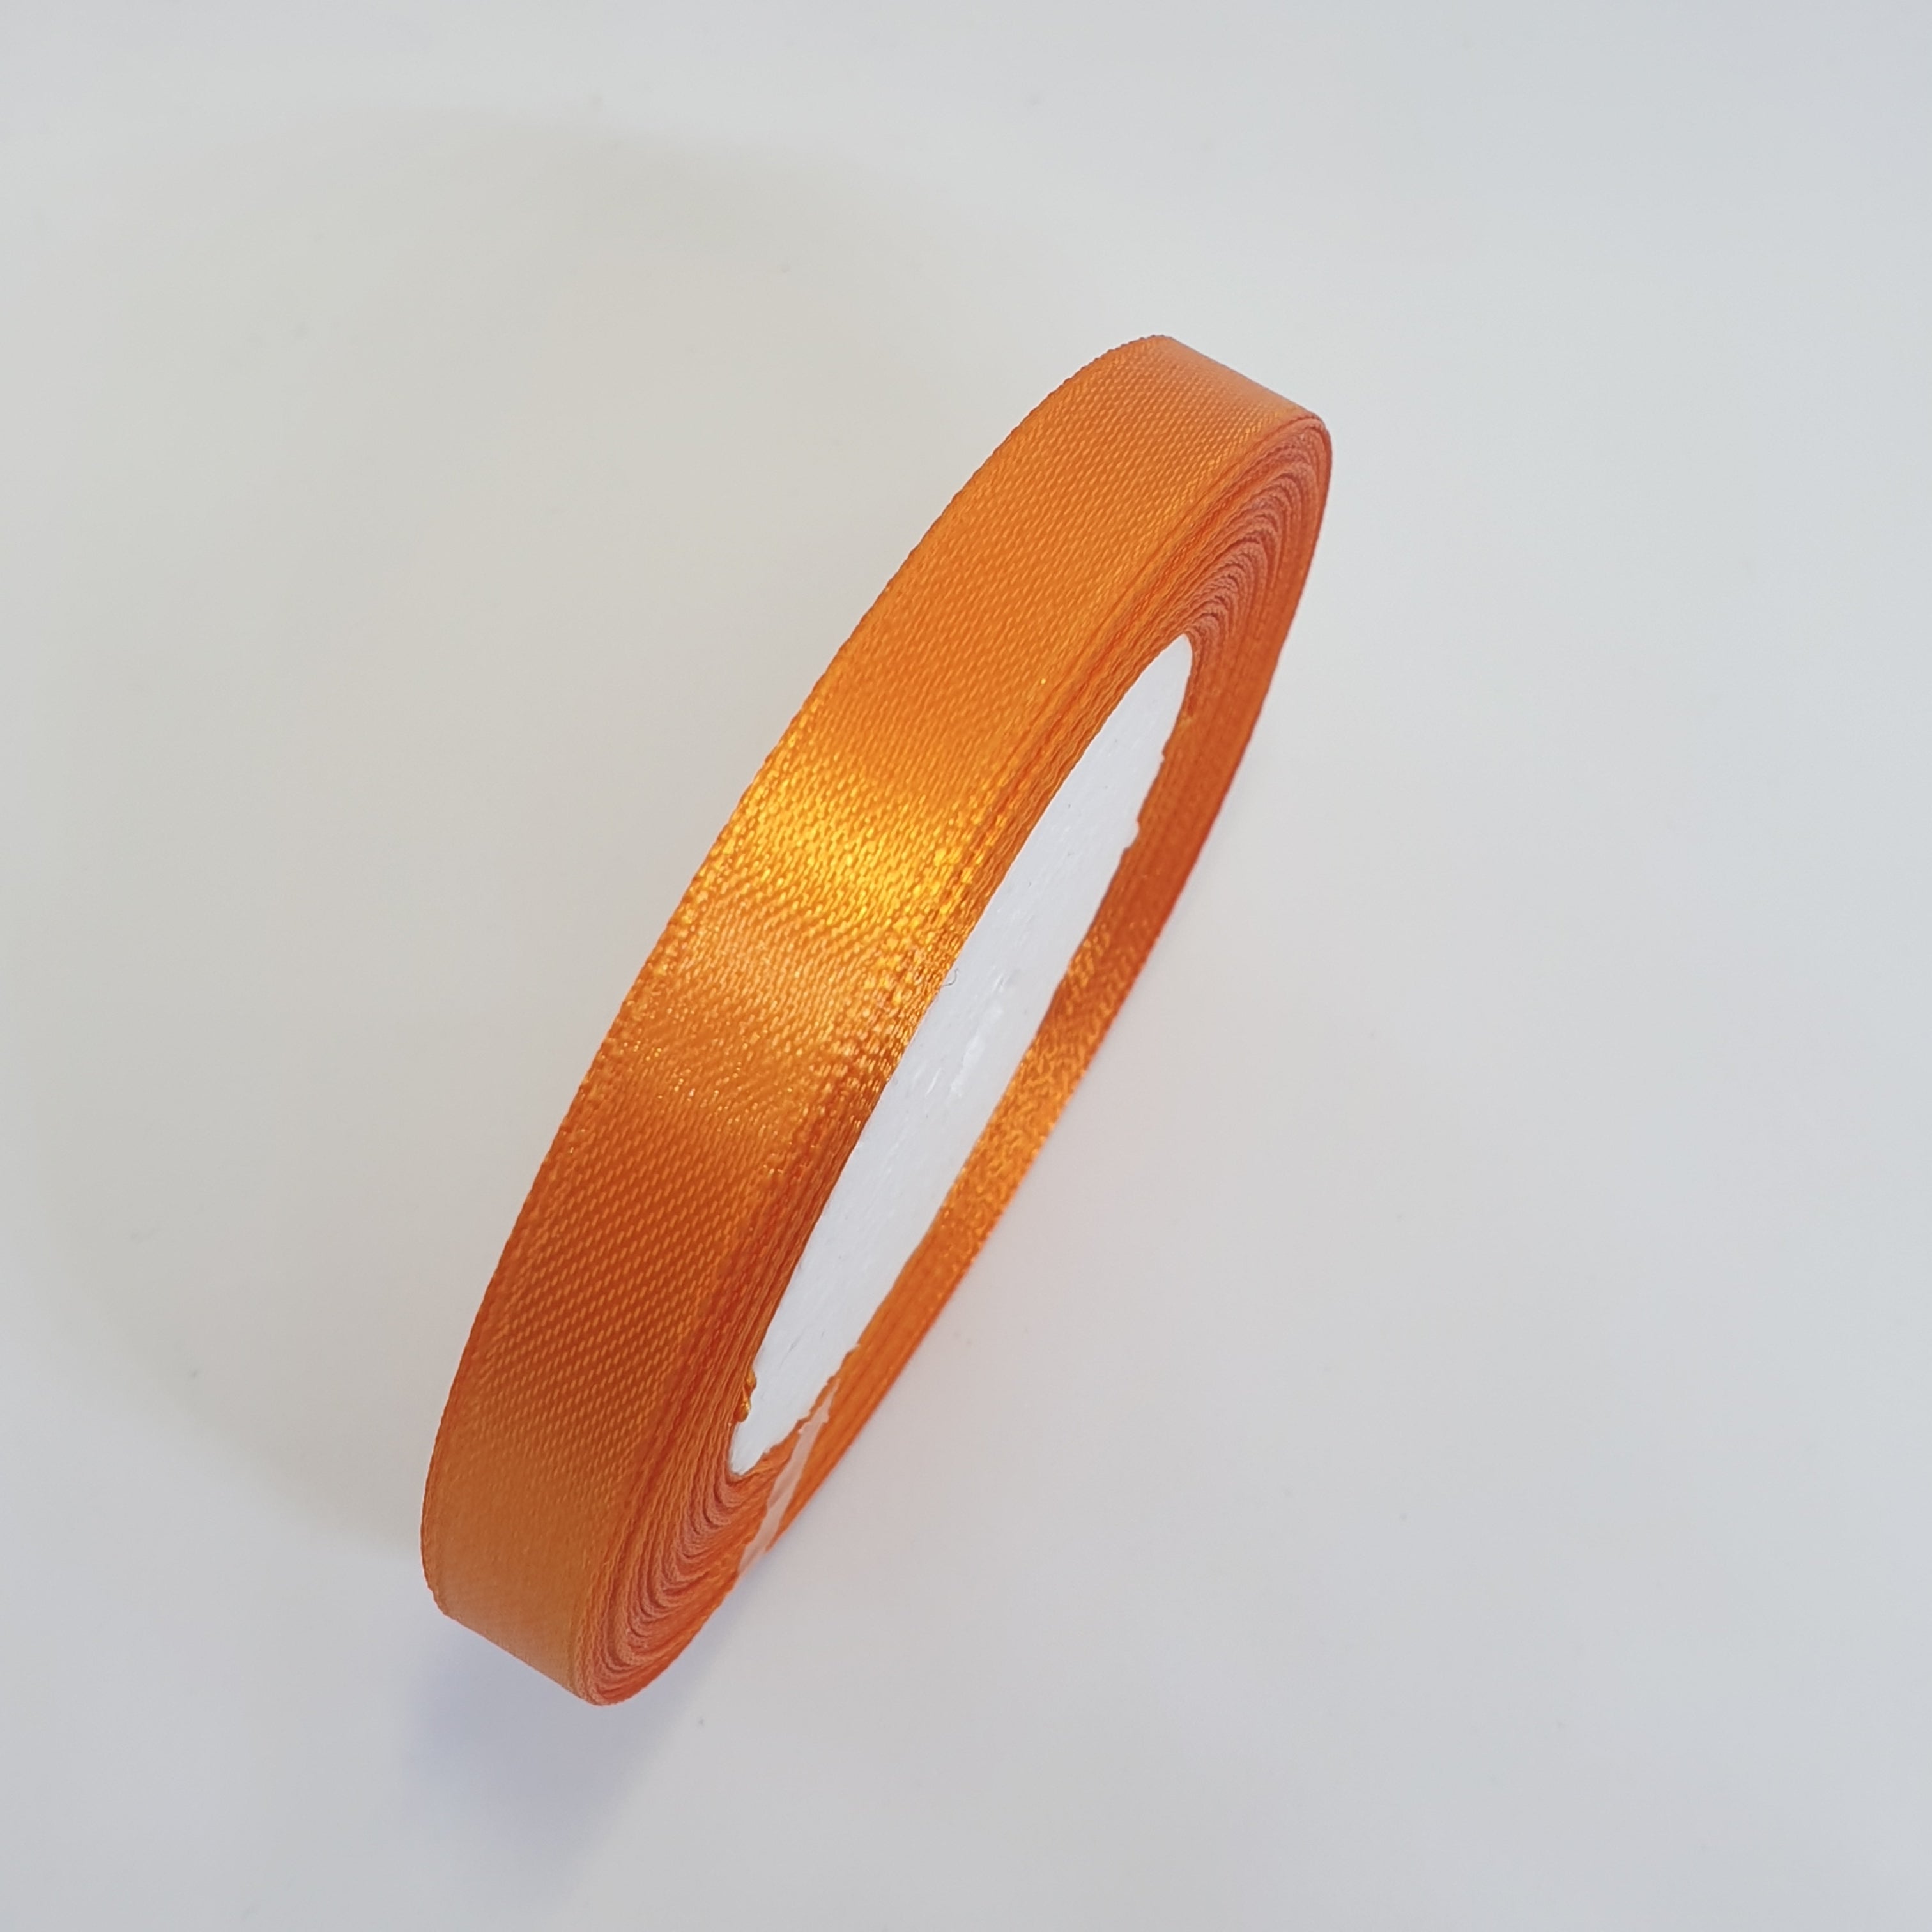 MajorCrafts 10mm 22metres Carrot Orange Single Sided Satin Fabric Ribbon Roll R24